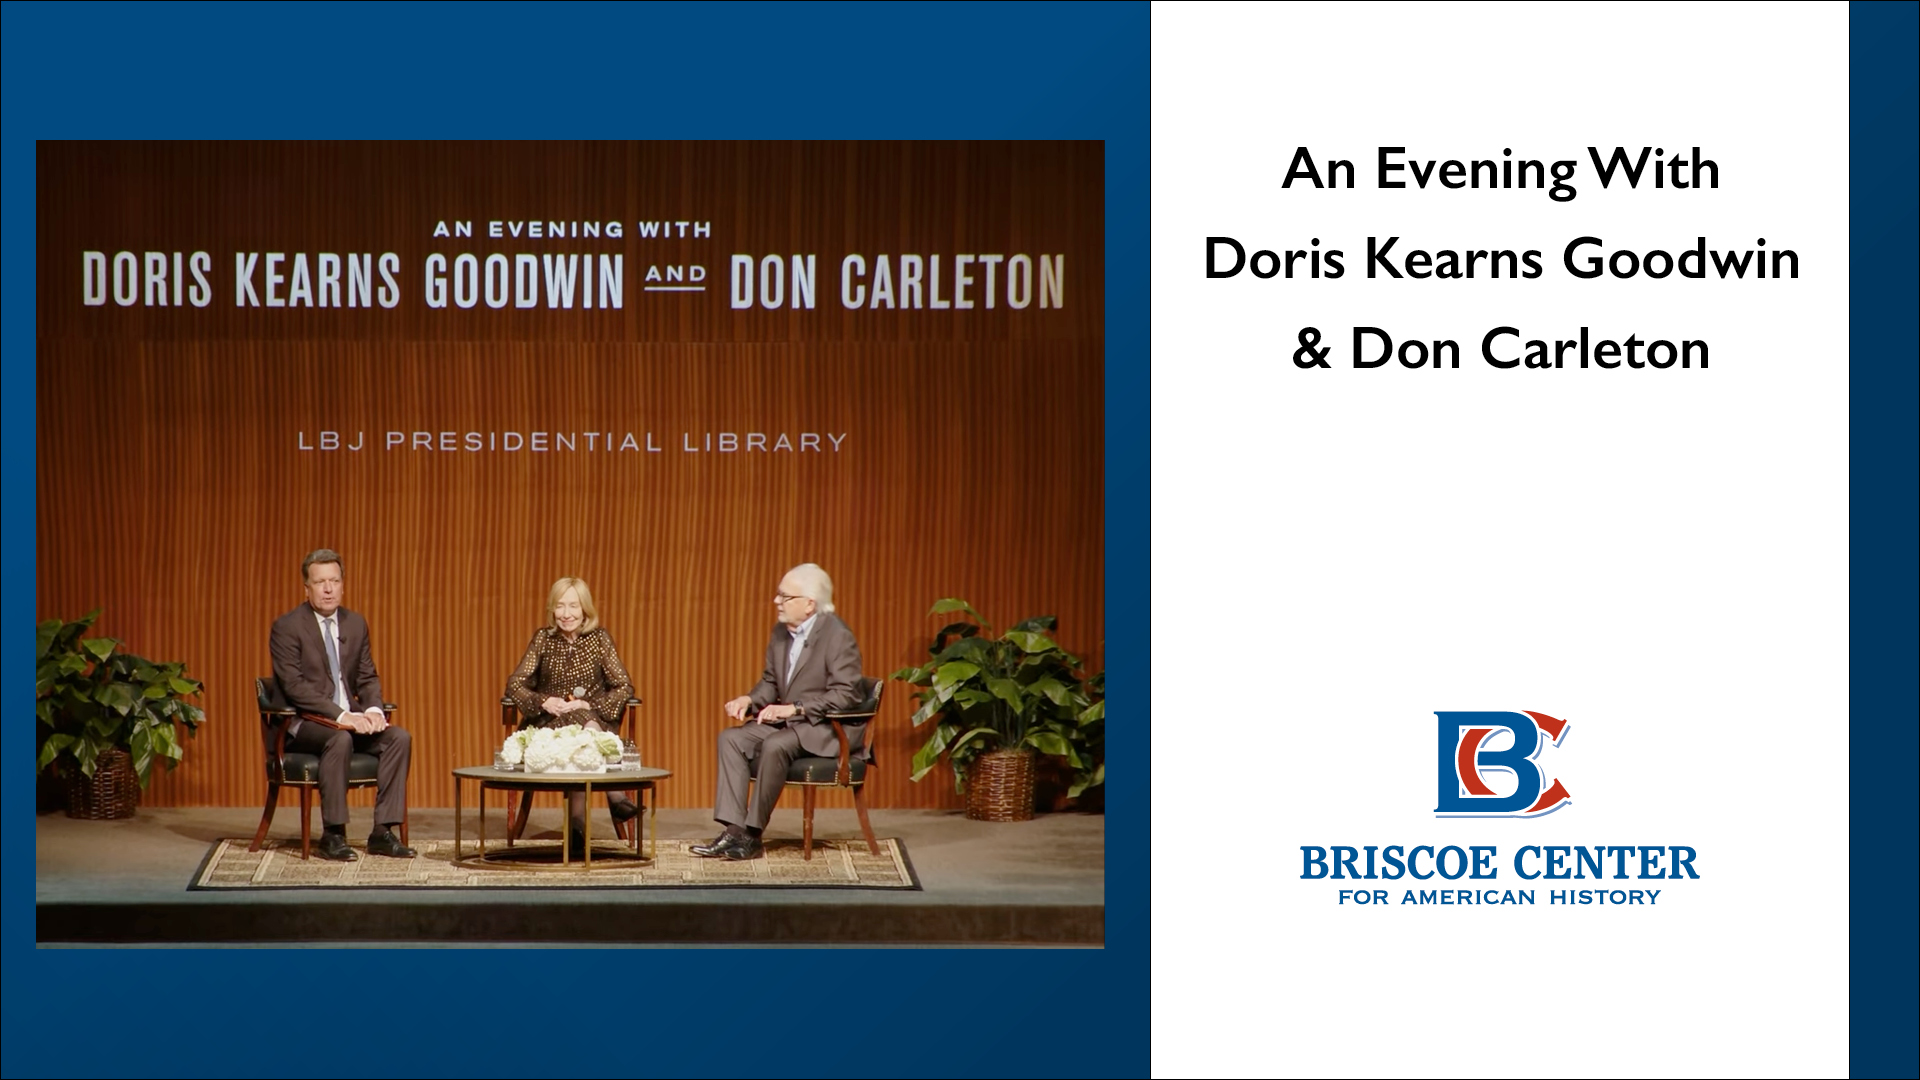 An Evening With Doris Kearns Goodwin & Don Carleton